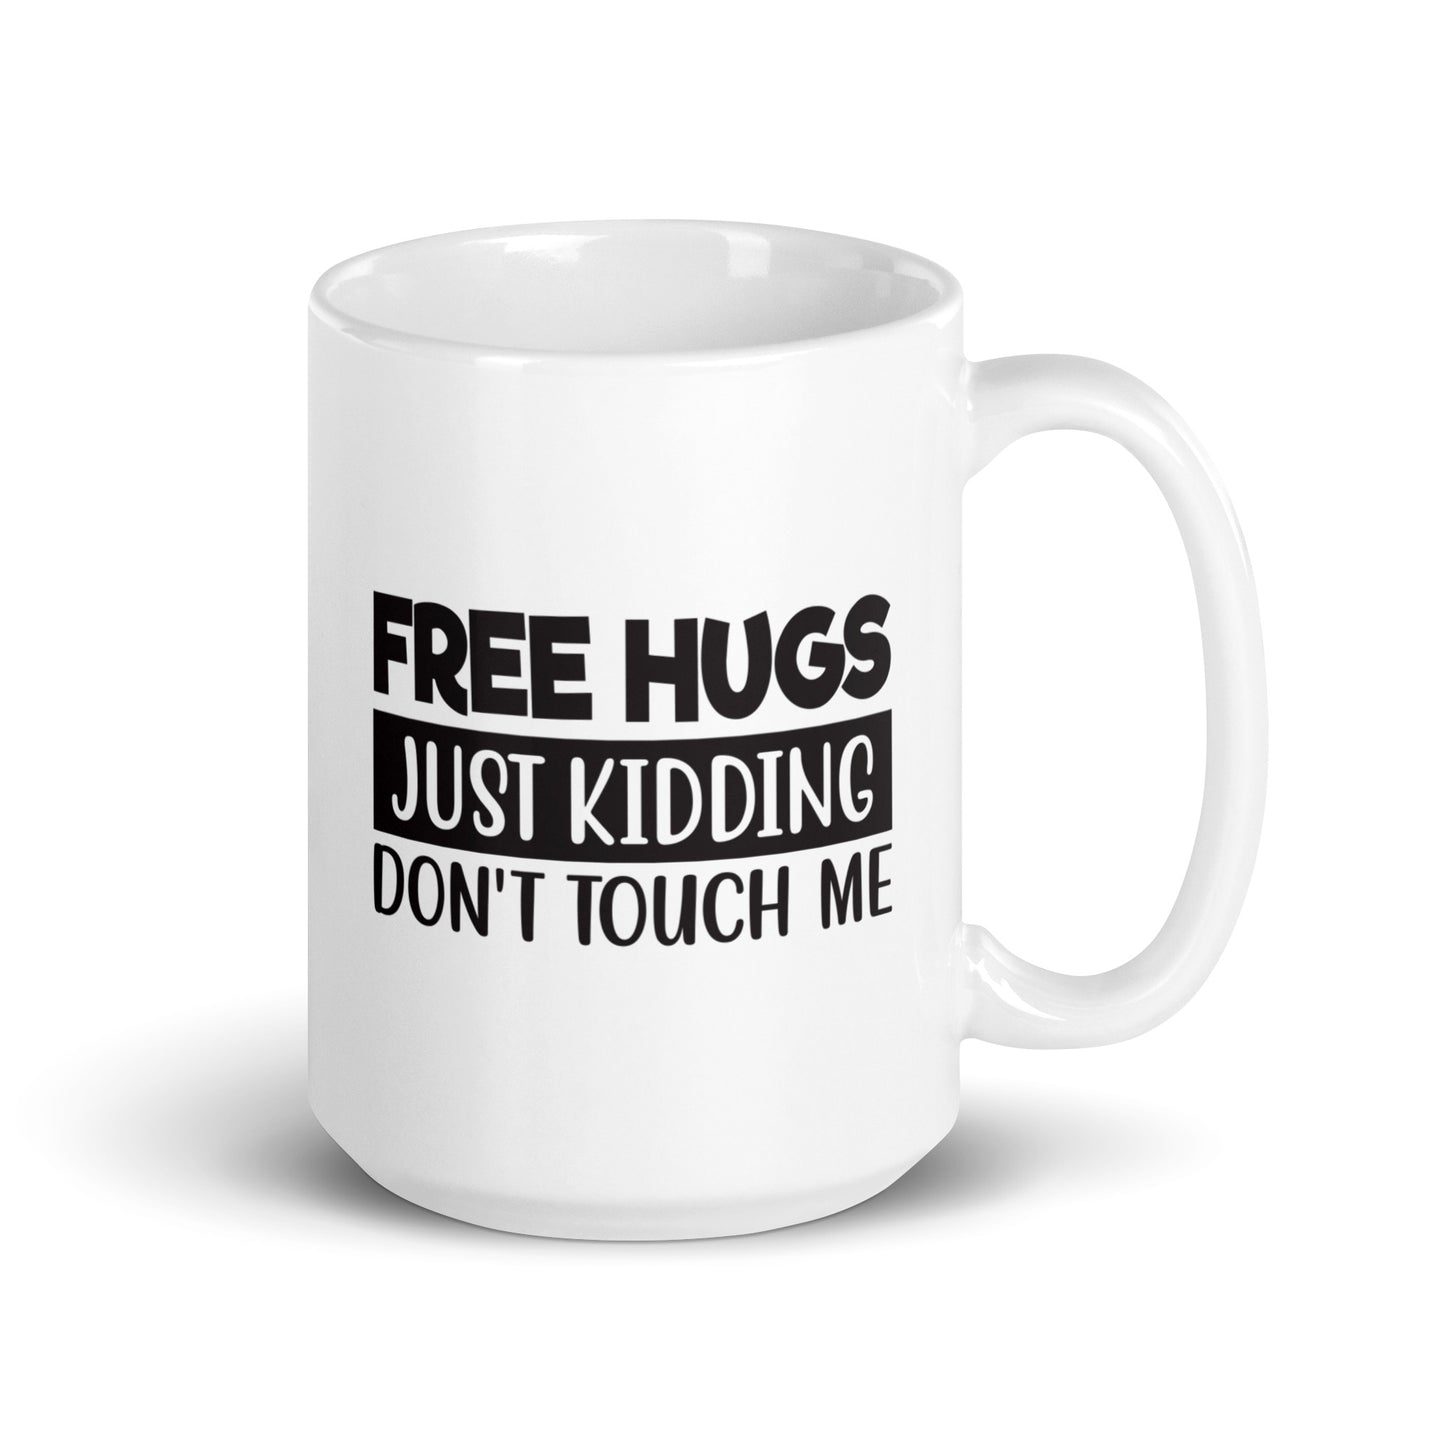 Free Hugs, Just Kidding White Ceramic Coffee Mug